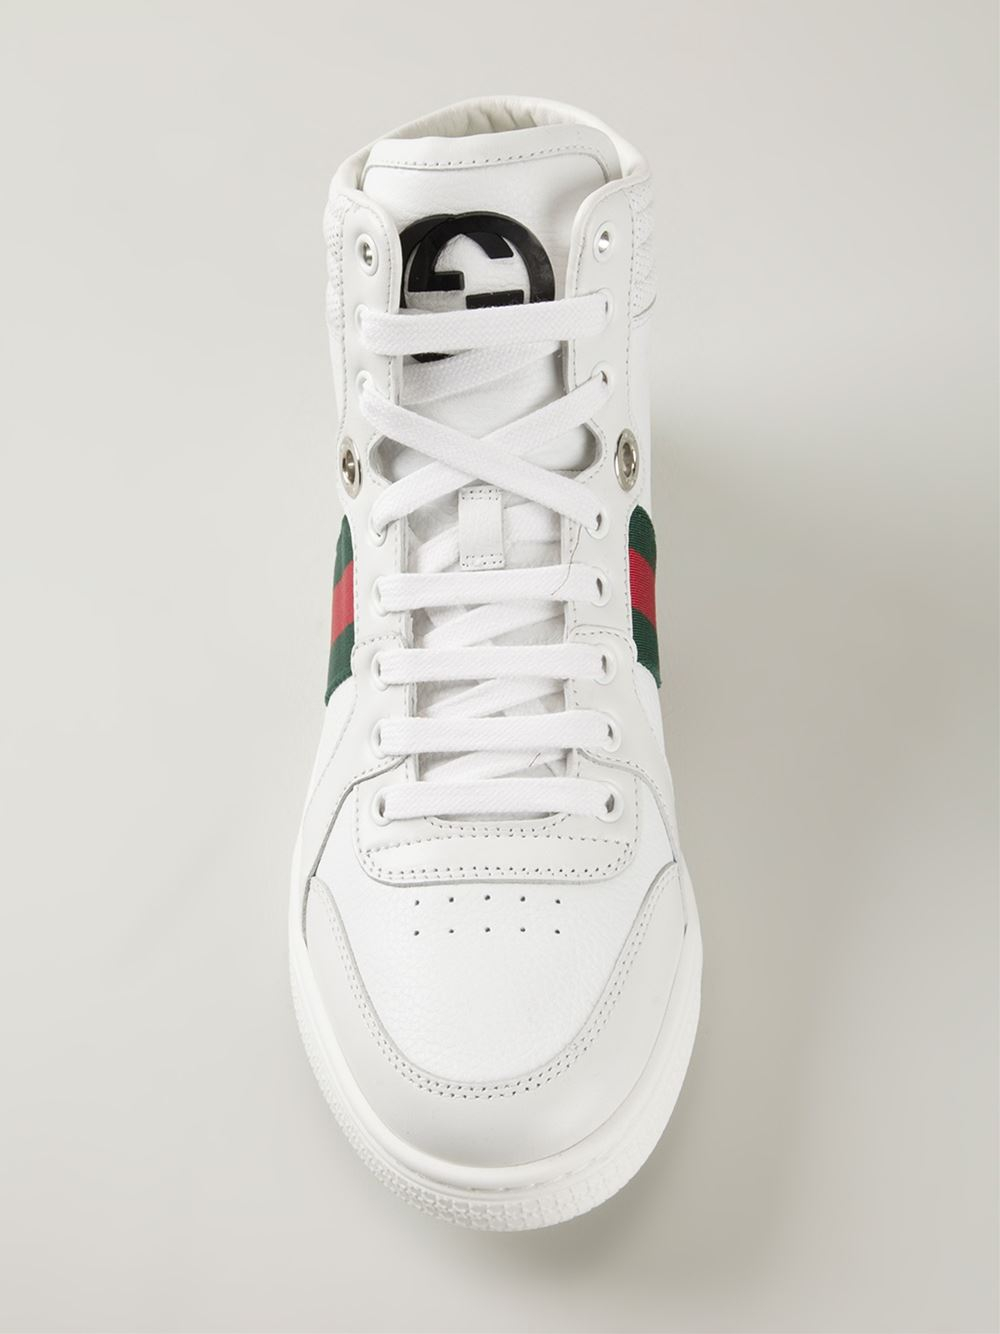 Gucci 'Coda' Hi-Top Sneakers in White - Lyst